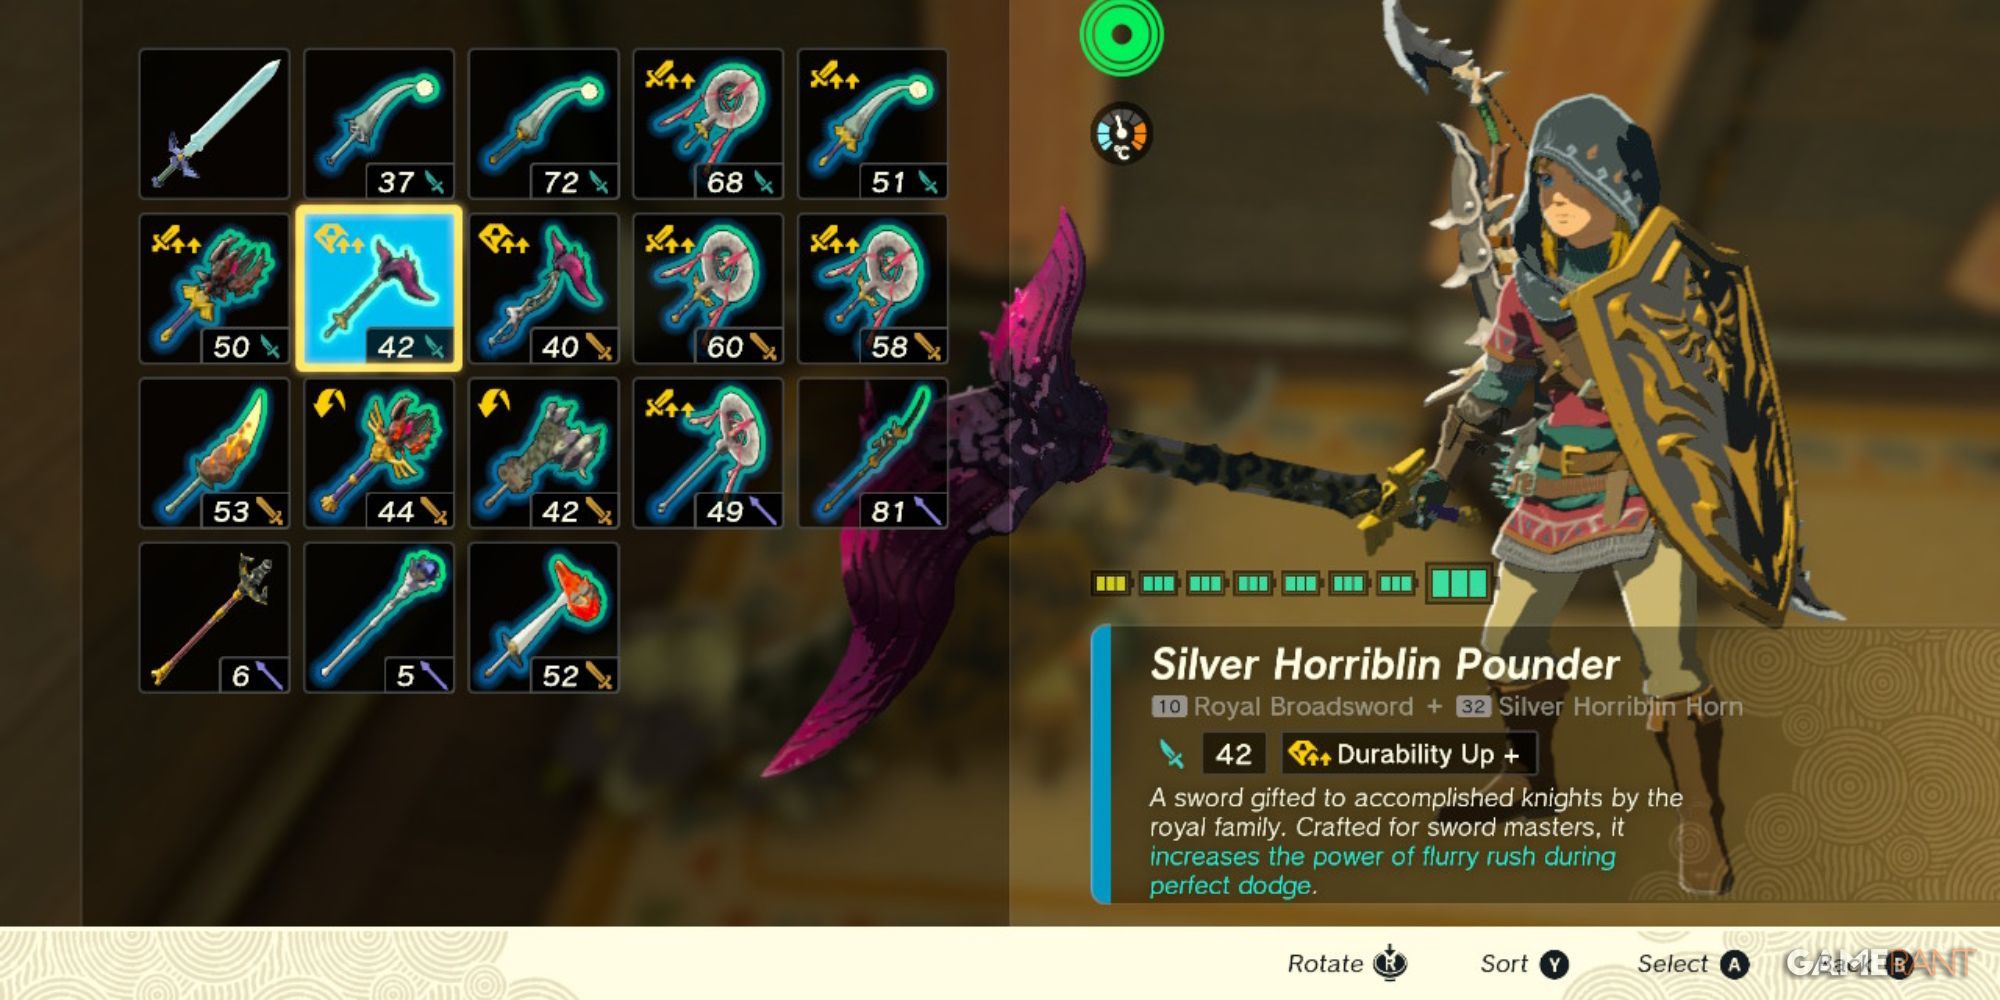 Link wielding a Silver Horriblin Pounder